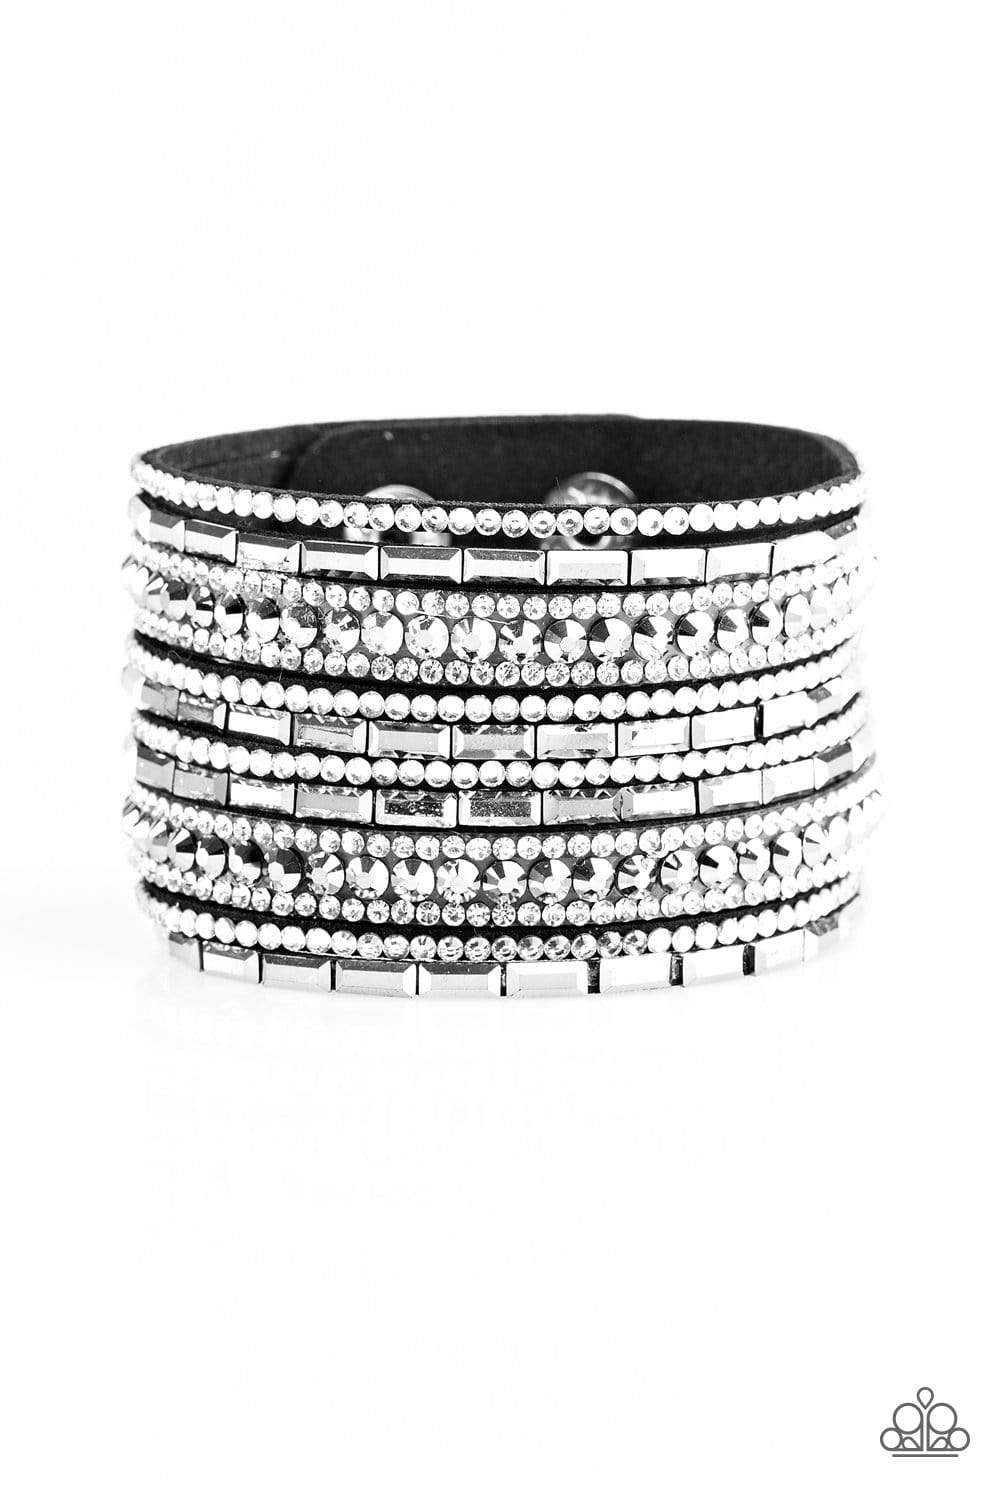 Wham Bam Glam - Black/White Wrap Bracelet